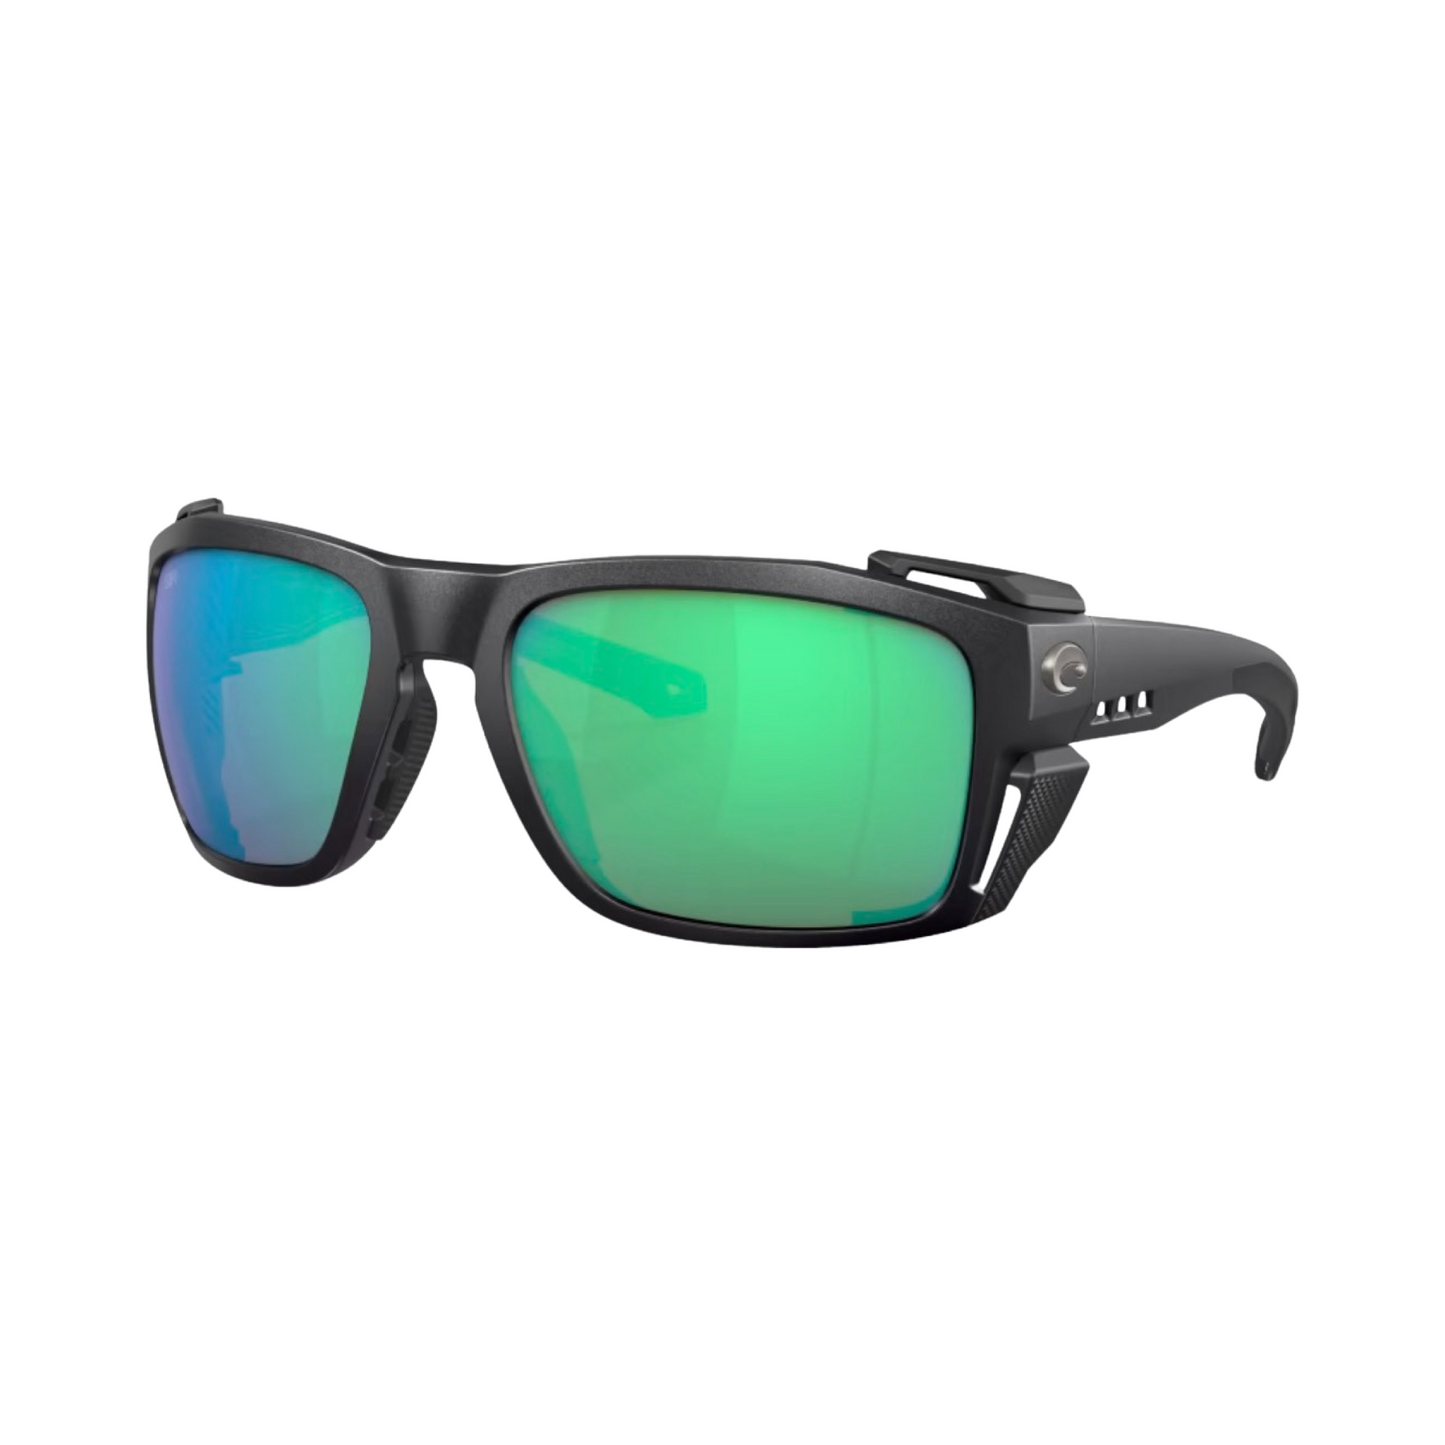 King Tide 6 Black Pearl Sunglasses - Green Mirror 580G